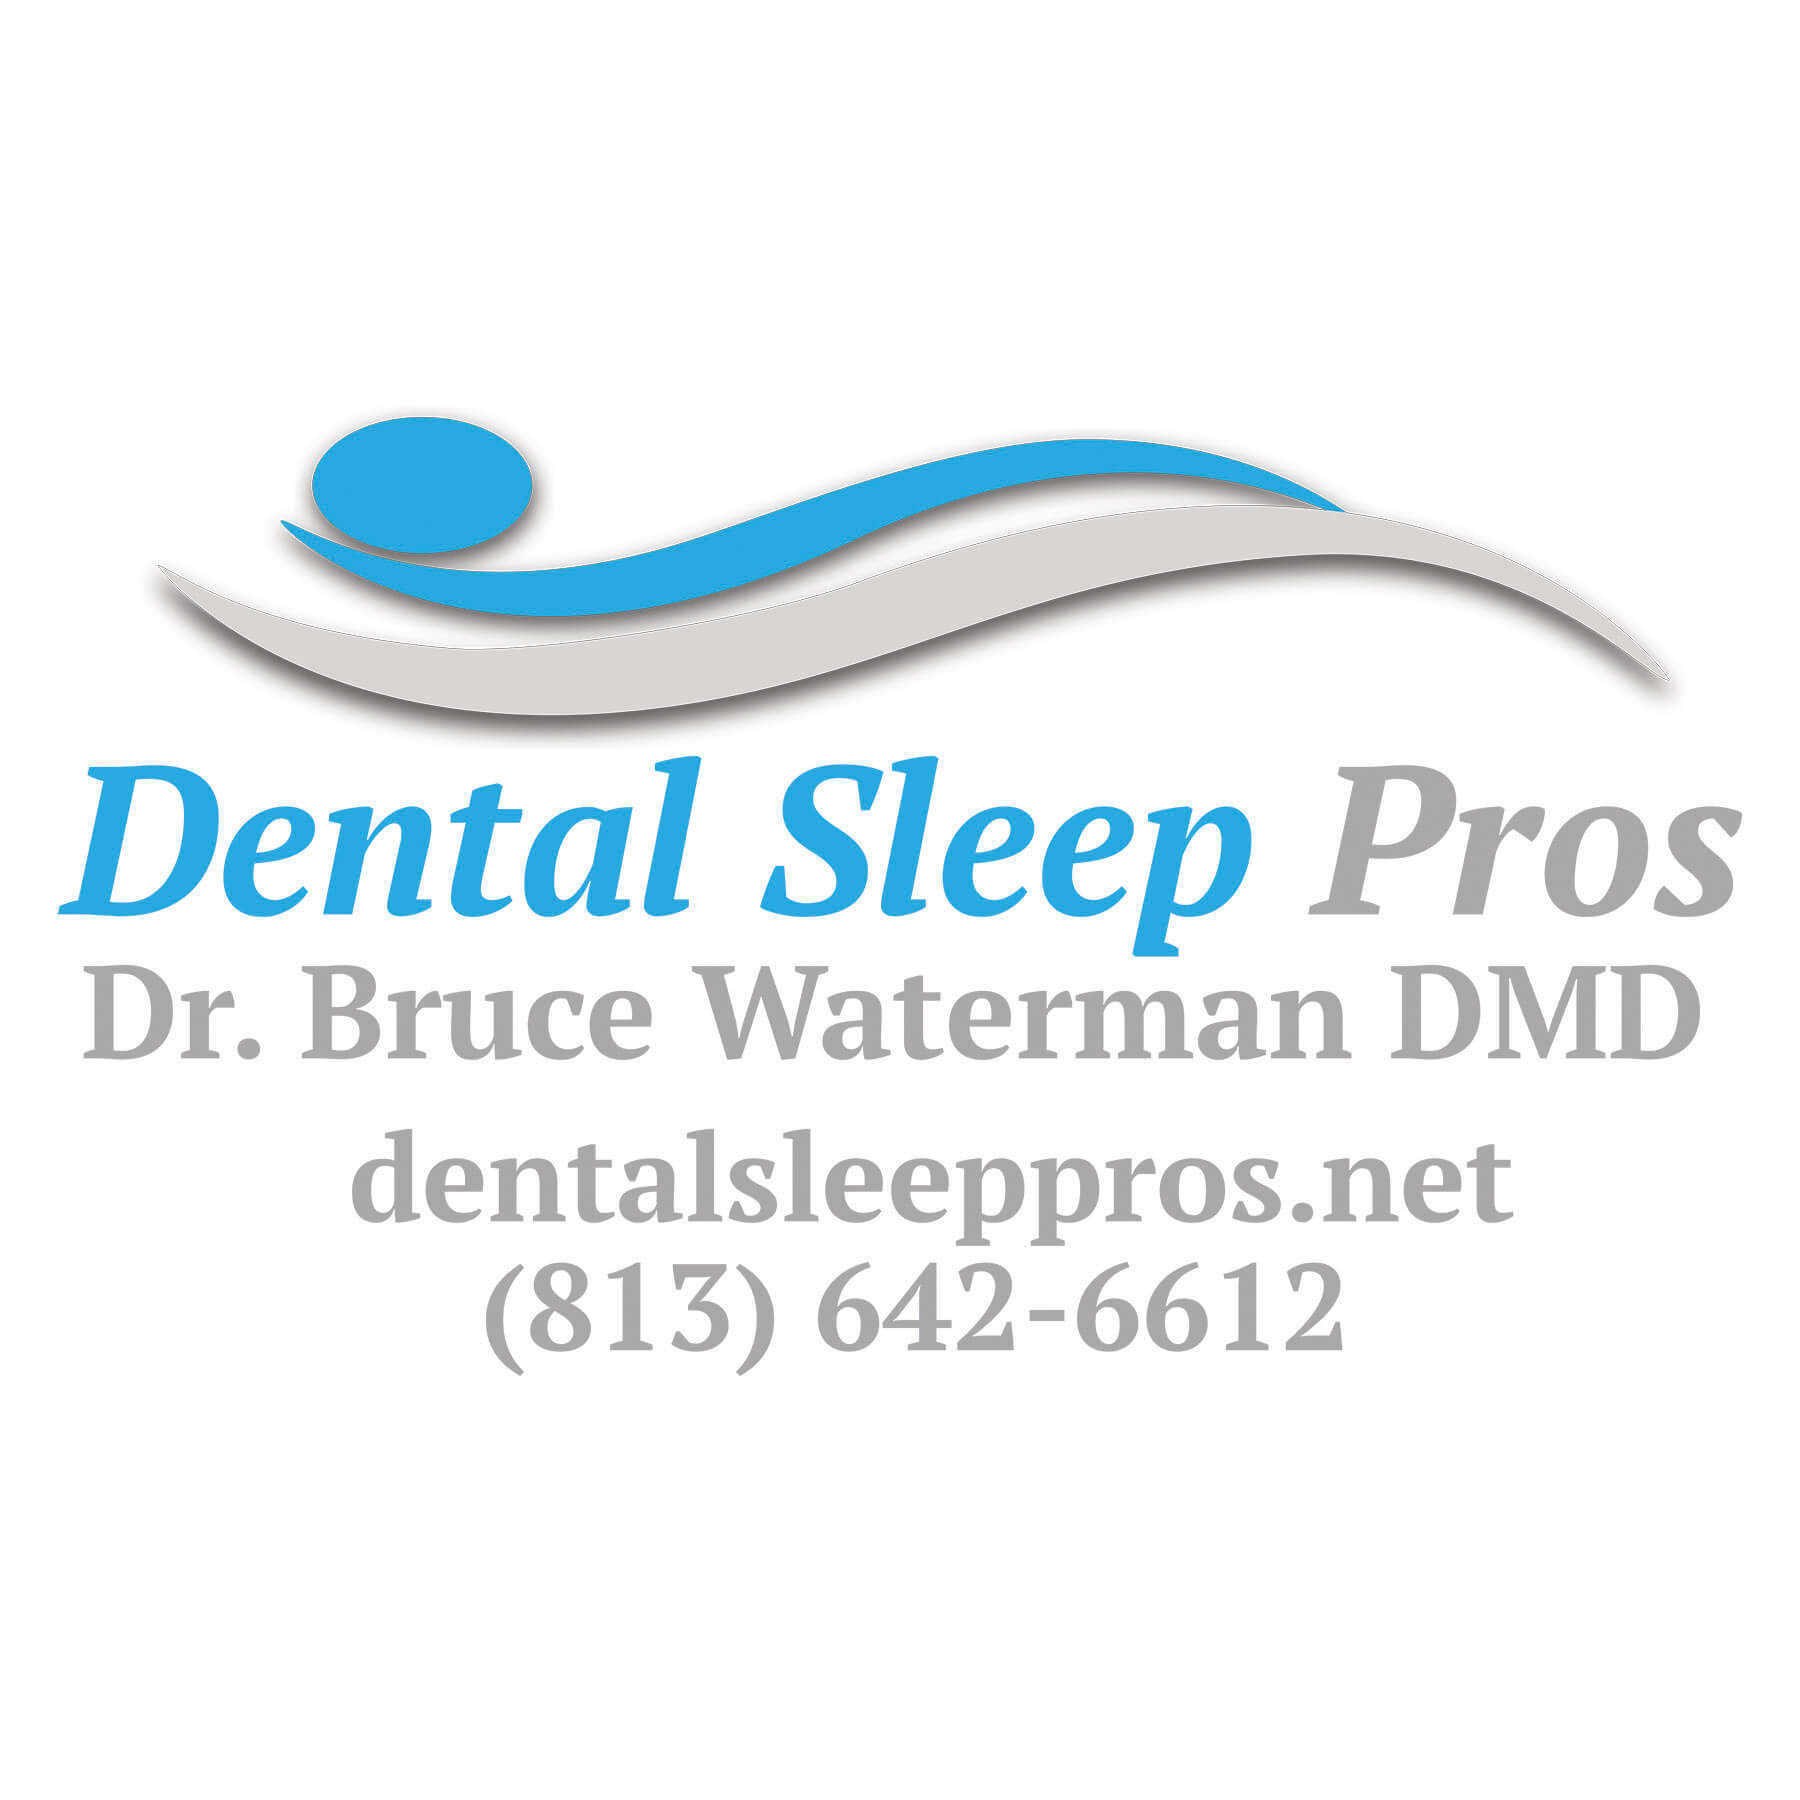 Dental Sleep Pros in Apollo Beach